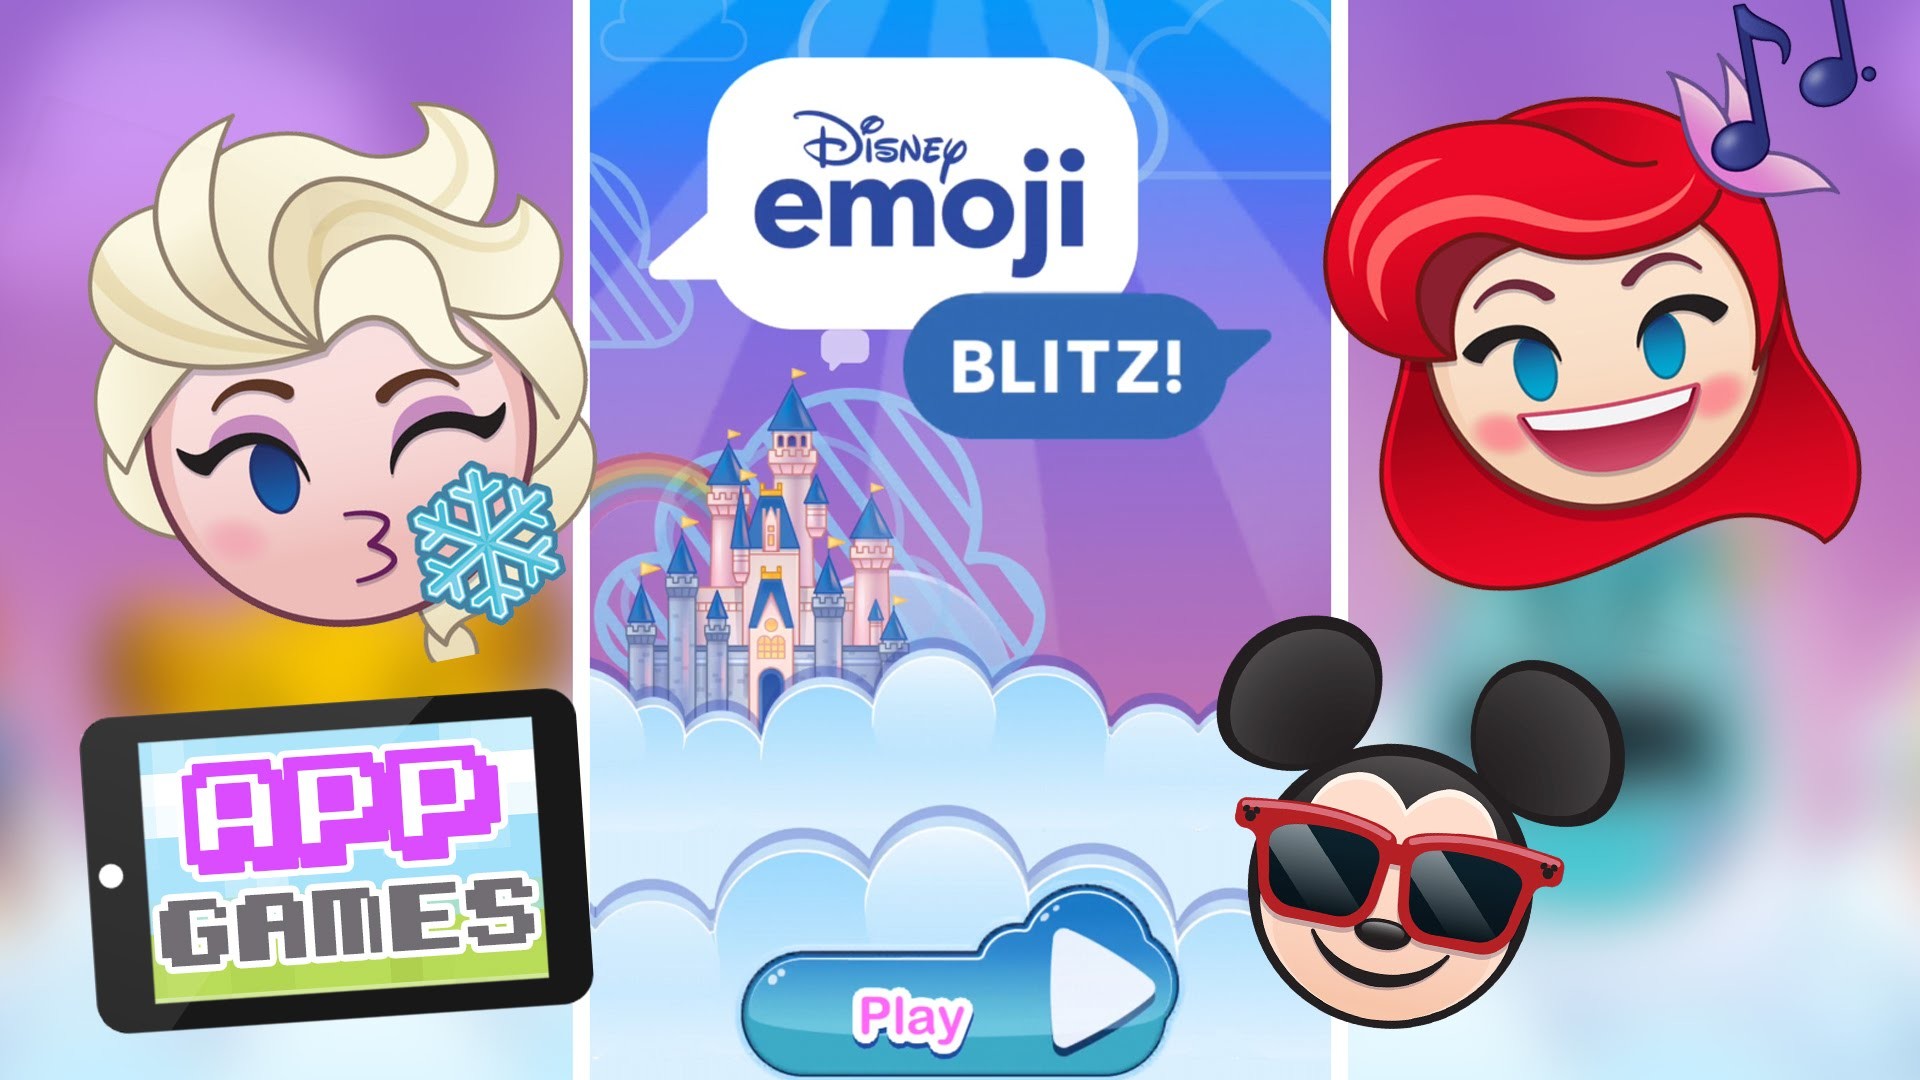 1920x1080 "SUPER CUTE EMOJIS!" | Disney Emoji Blitz | (App Games) - YouTube